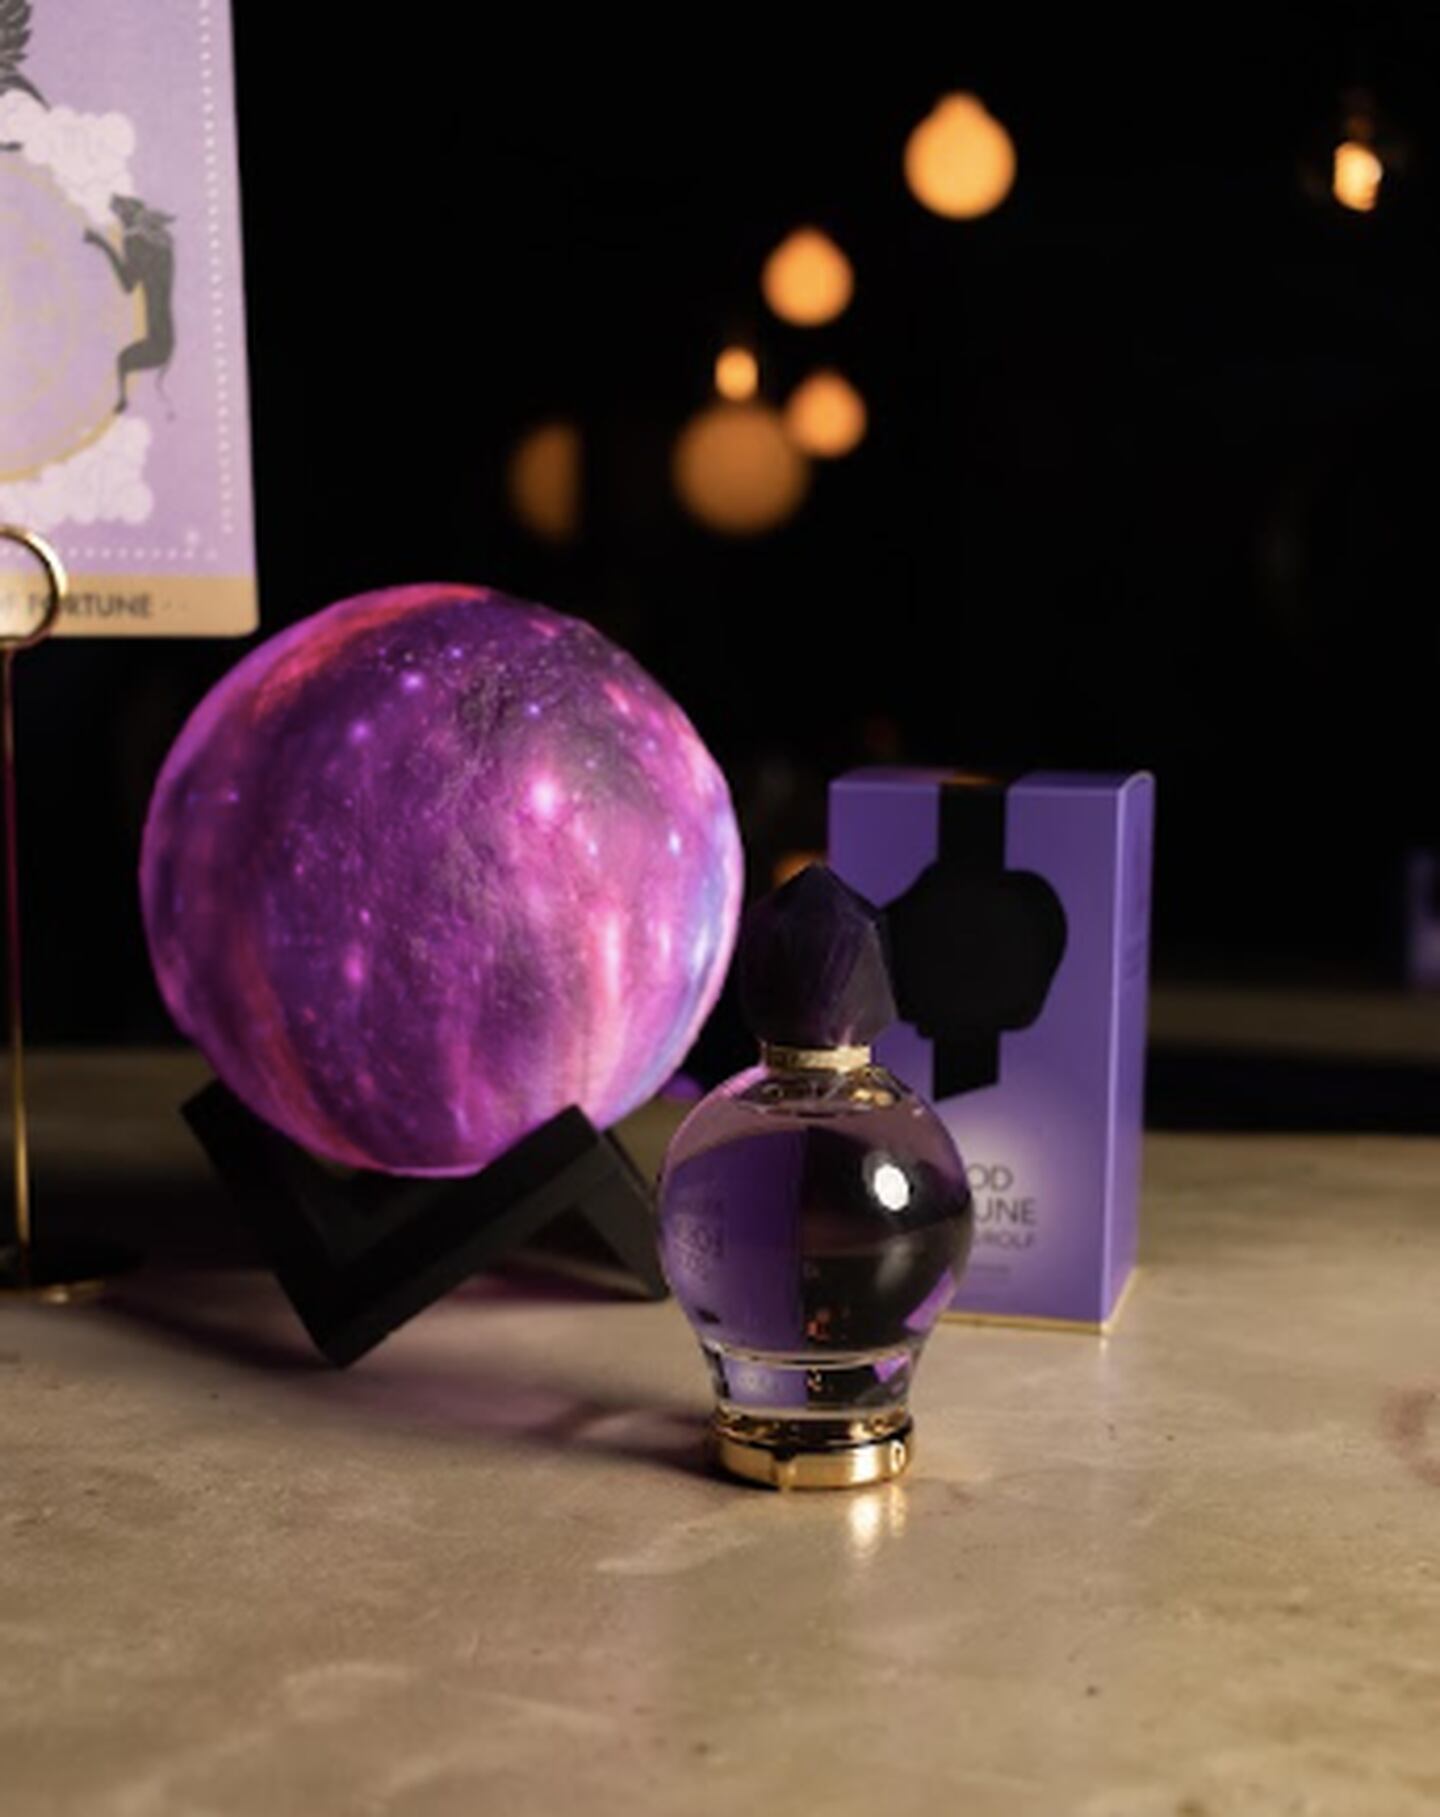 Viktor & Rolf presenta un nuevo perfume: Good Fortune